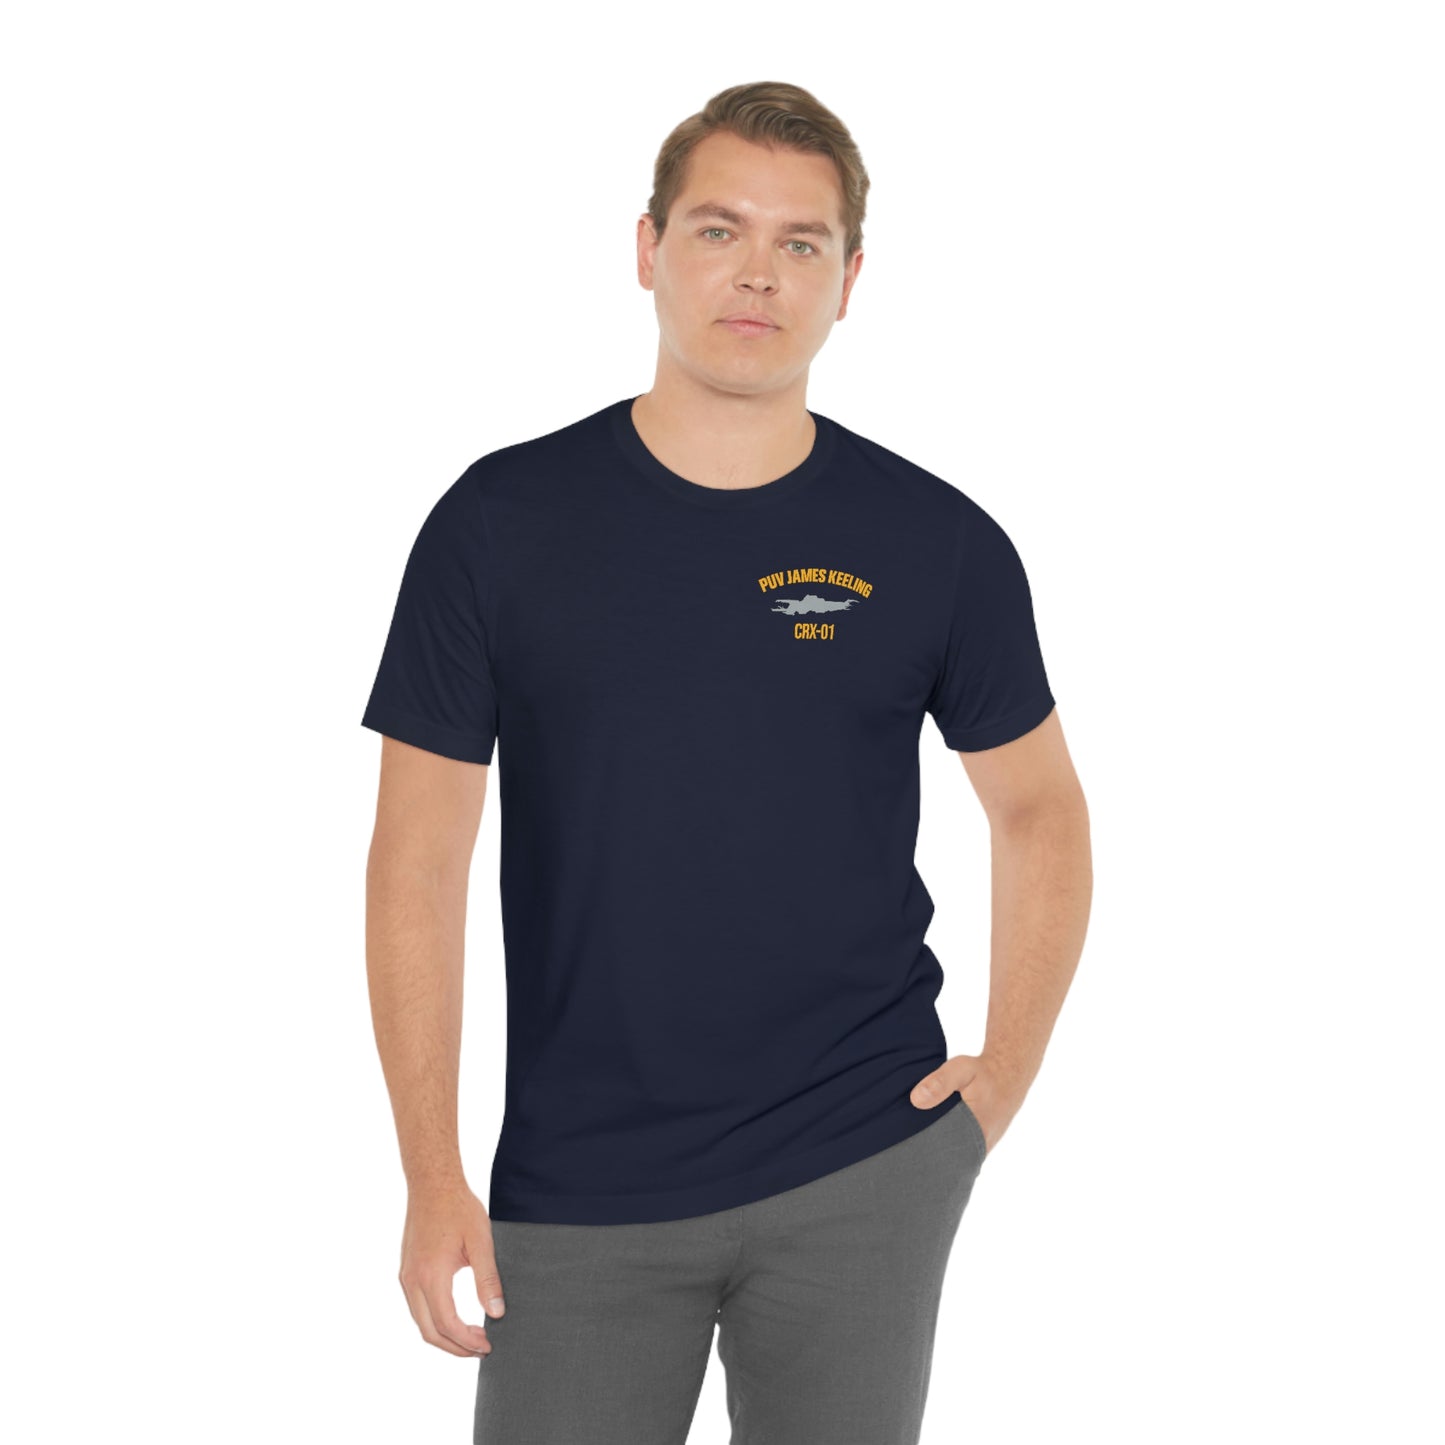 PUV James Keeling off-duty crew shirt